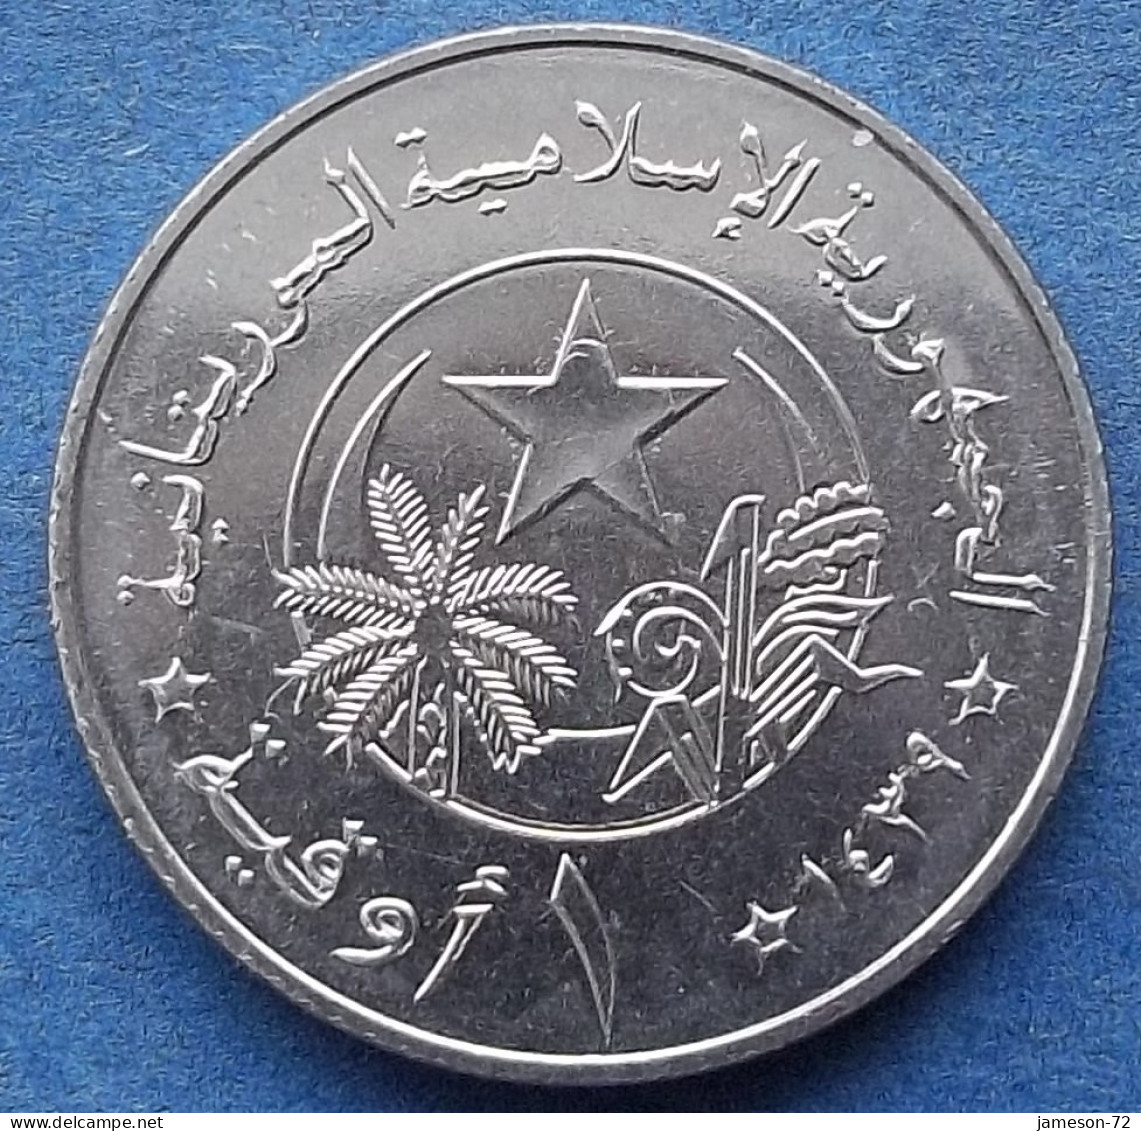 MAURITANIA - 1 Ouguiya AH1439 2017AD "Teapot" KM# 12 Independent Republic (1960) - Edelweiss Coins - Mauritanie